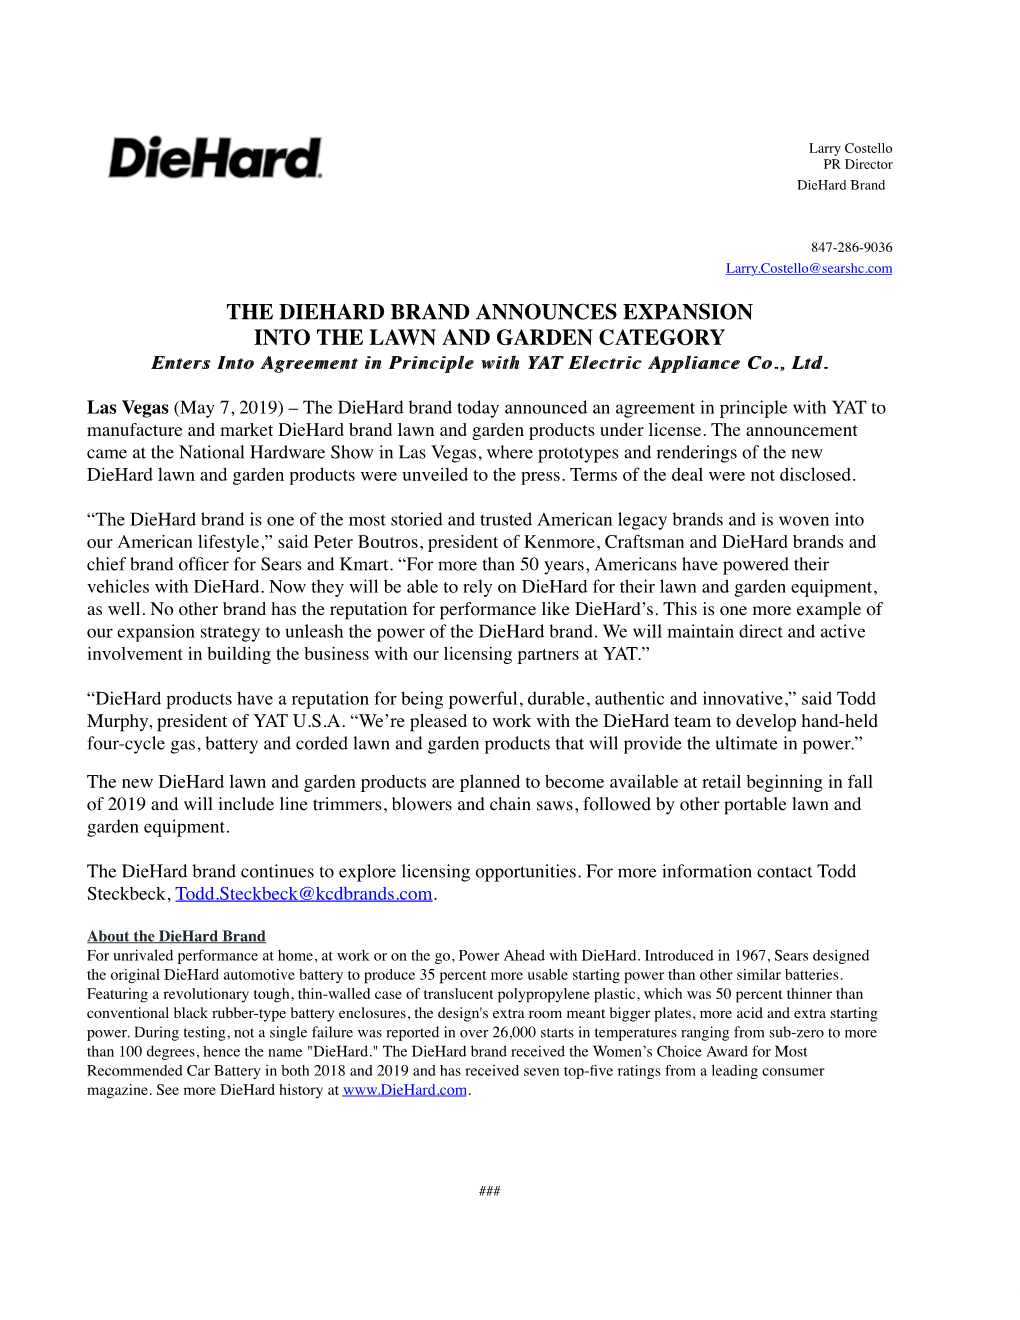 Diehard Lawn Garden Draft Release 5.3.19 for Bob Boyle 6.18.19.Docx